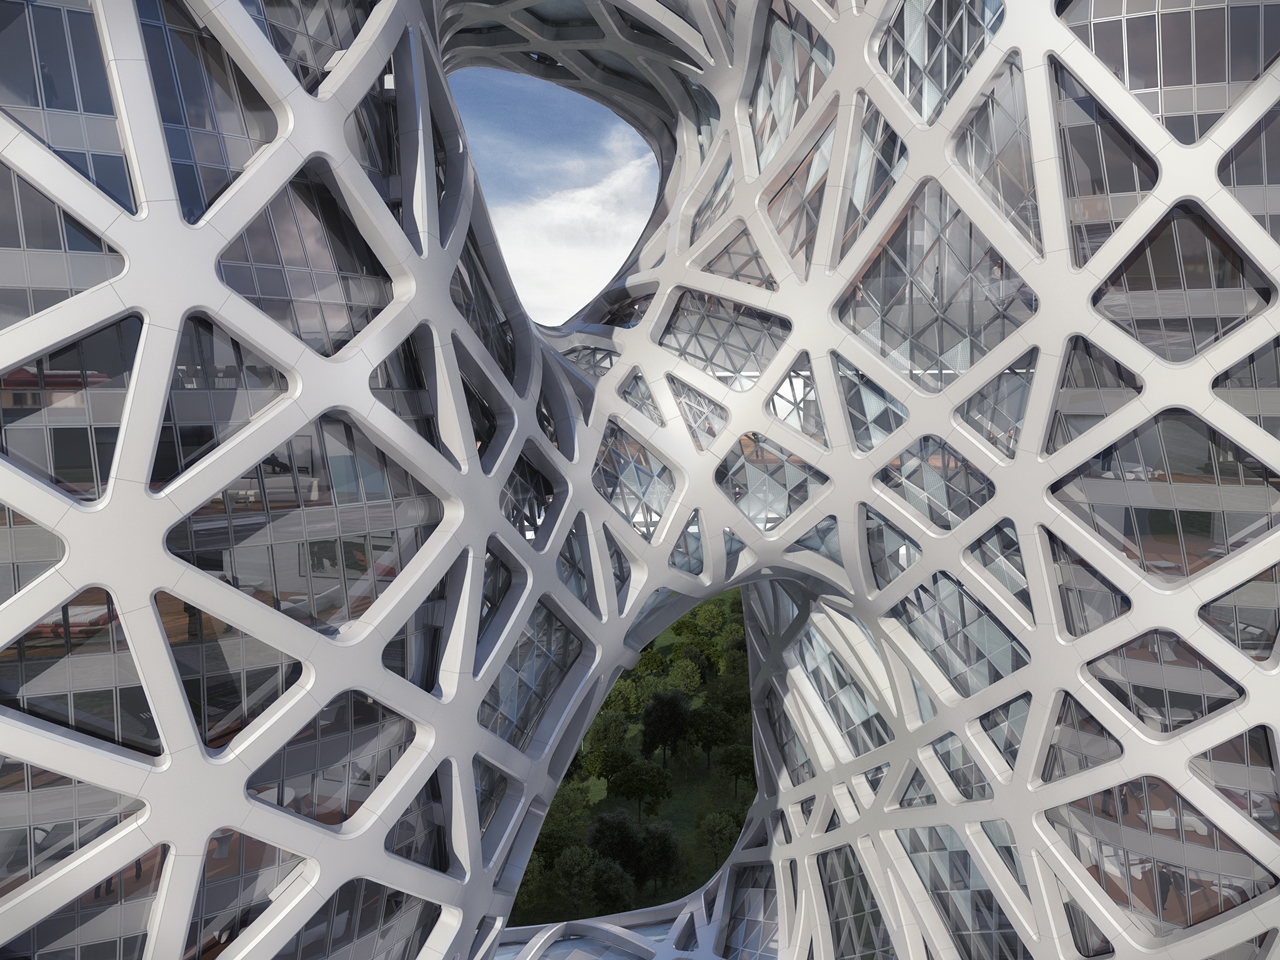 Futuristic architecture by Zaha Hadid Architects